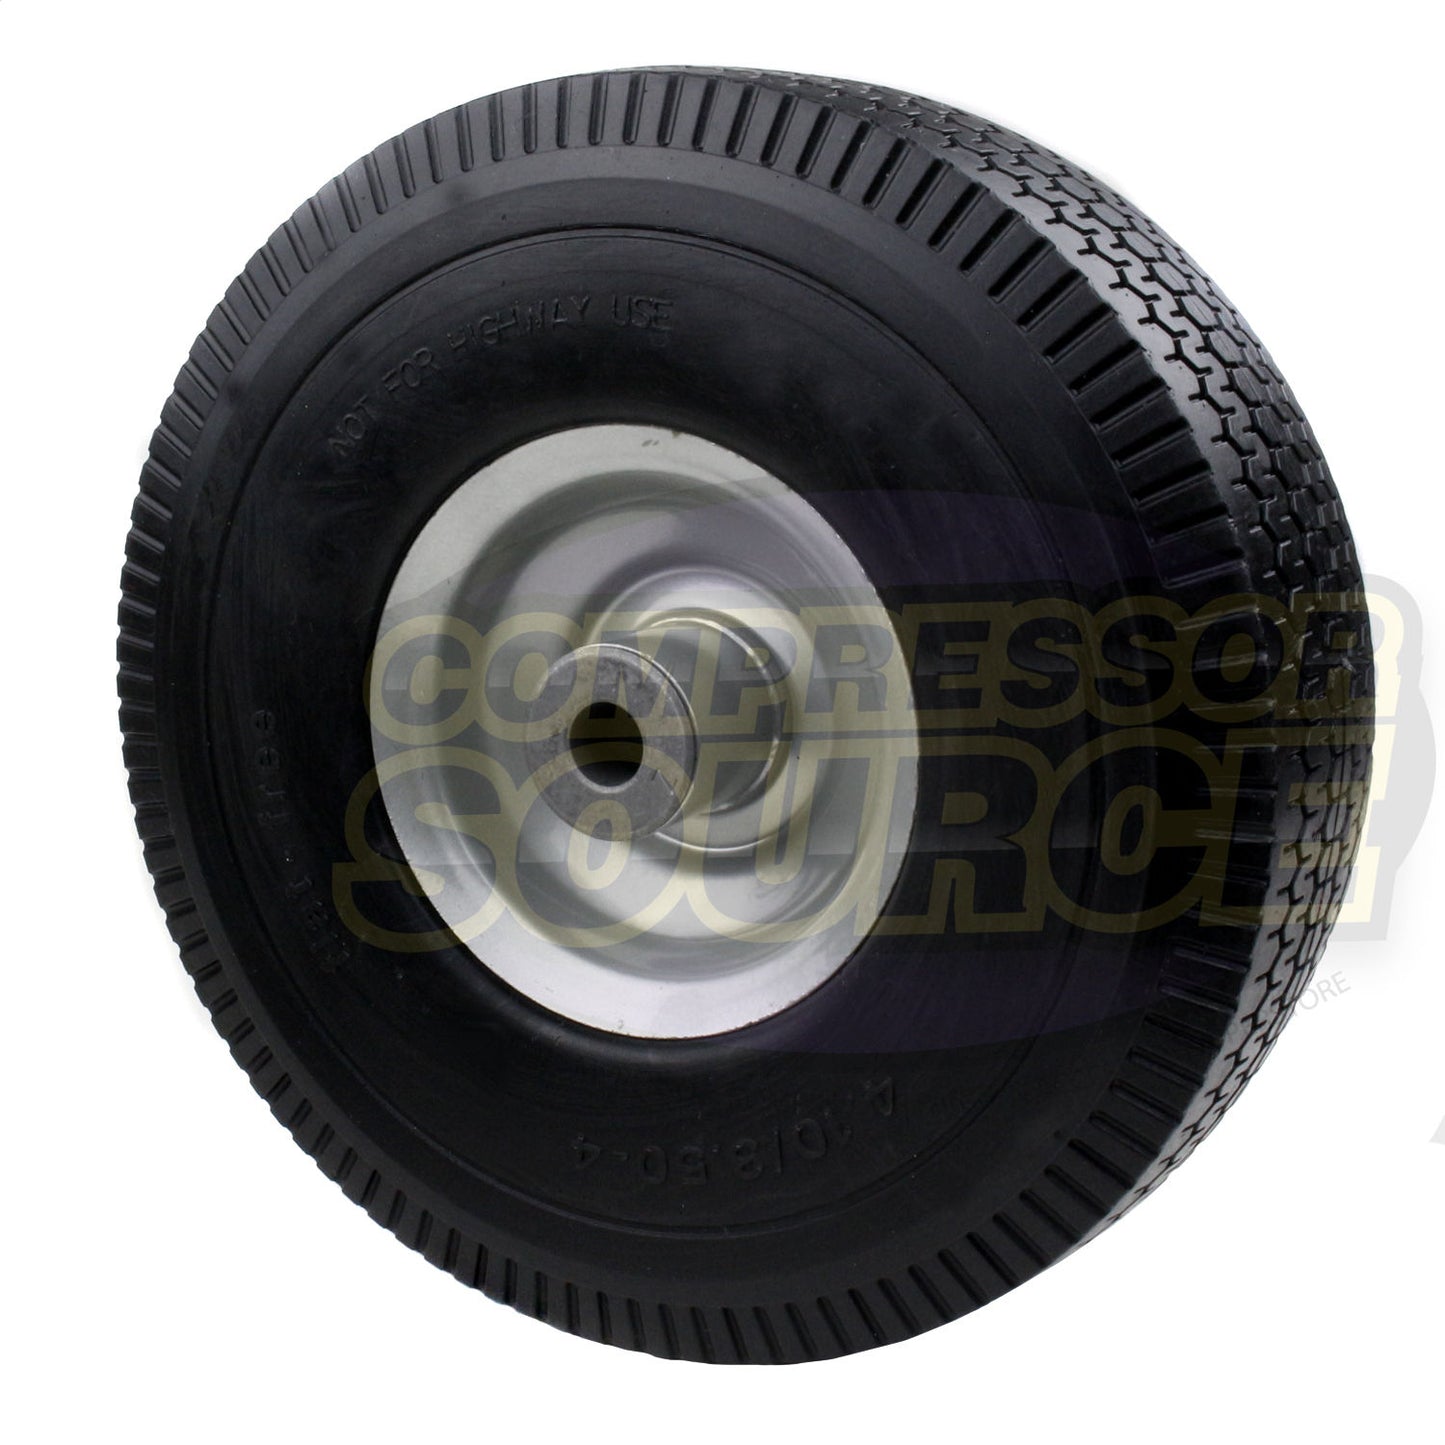 WLS50 Rolair Air Compressor Replacement Wheel Solid Flat Free Polyurethane Tire For Dewalt Emglo Quincy Jenny Ridgid Air Compressors